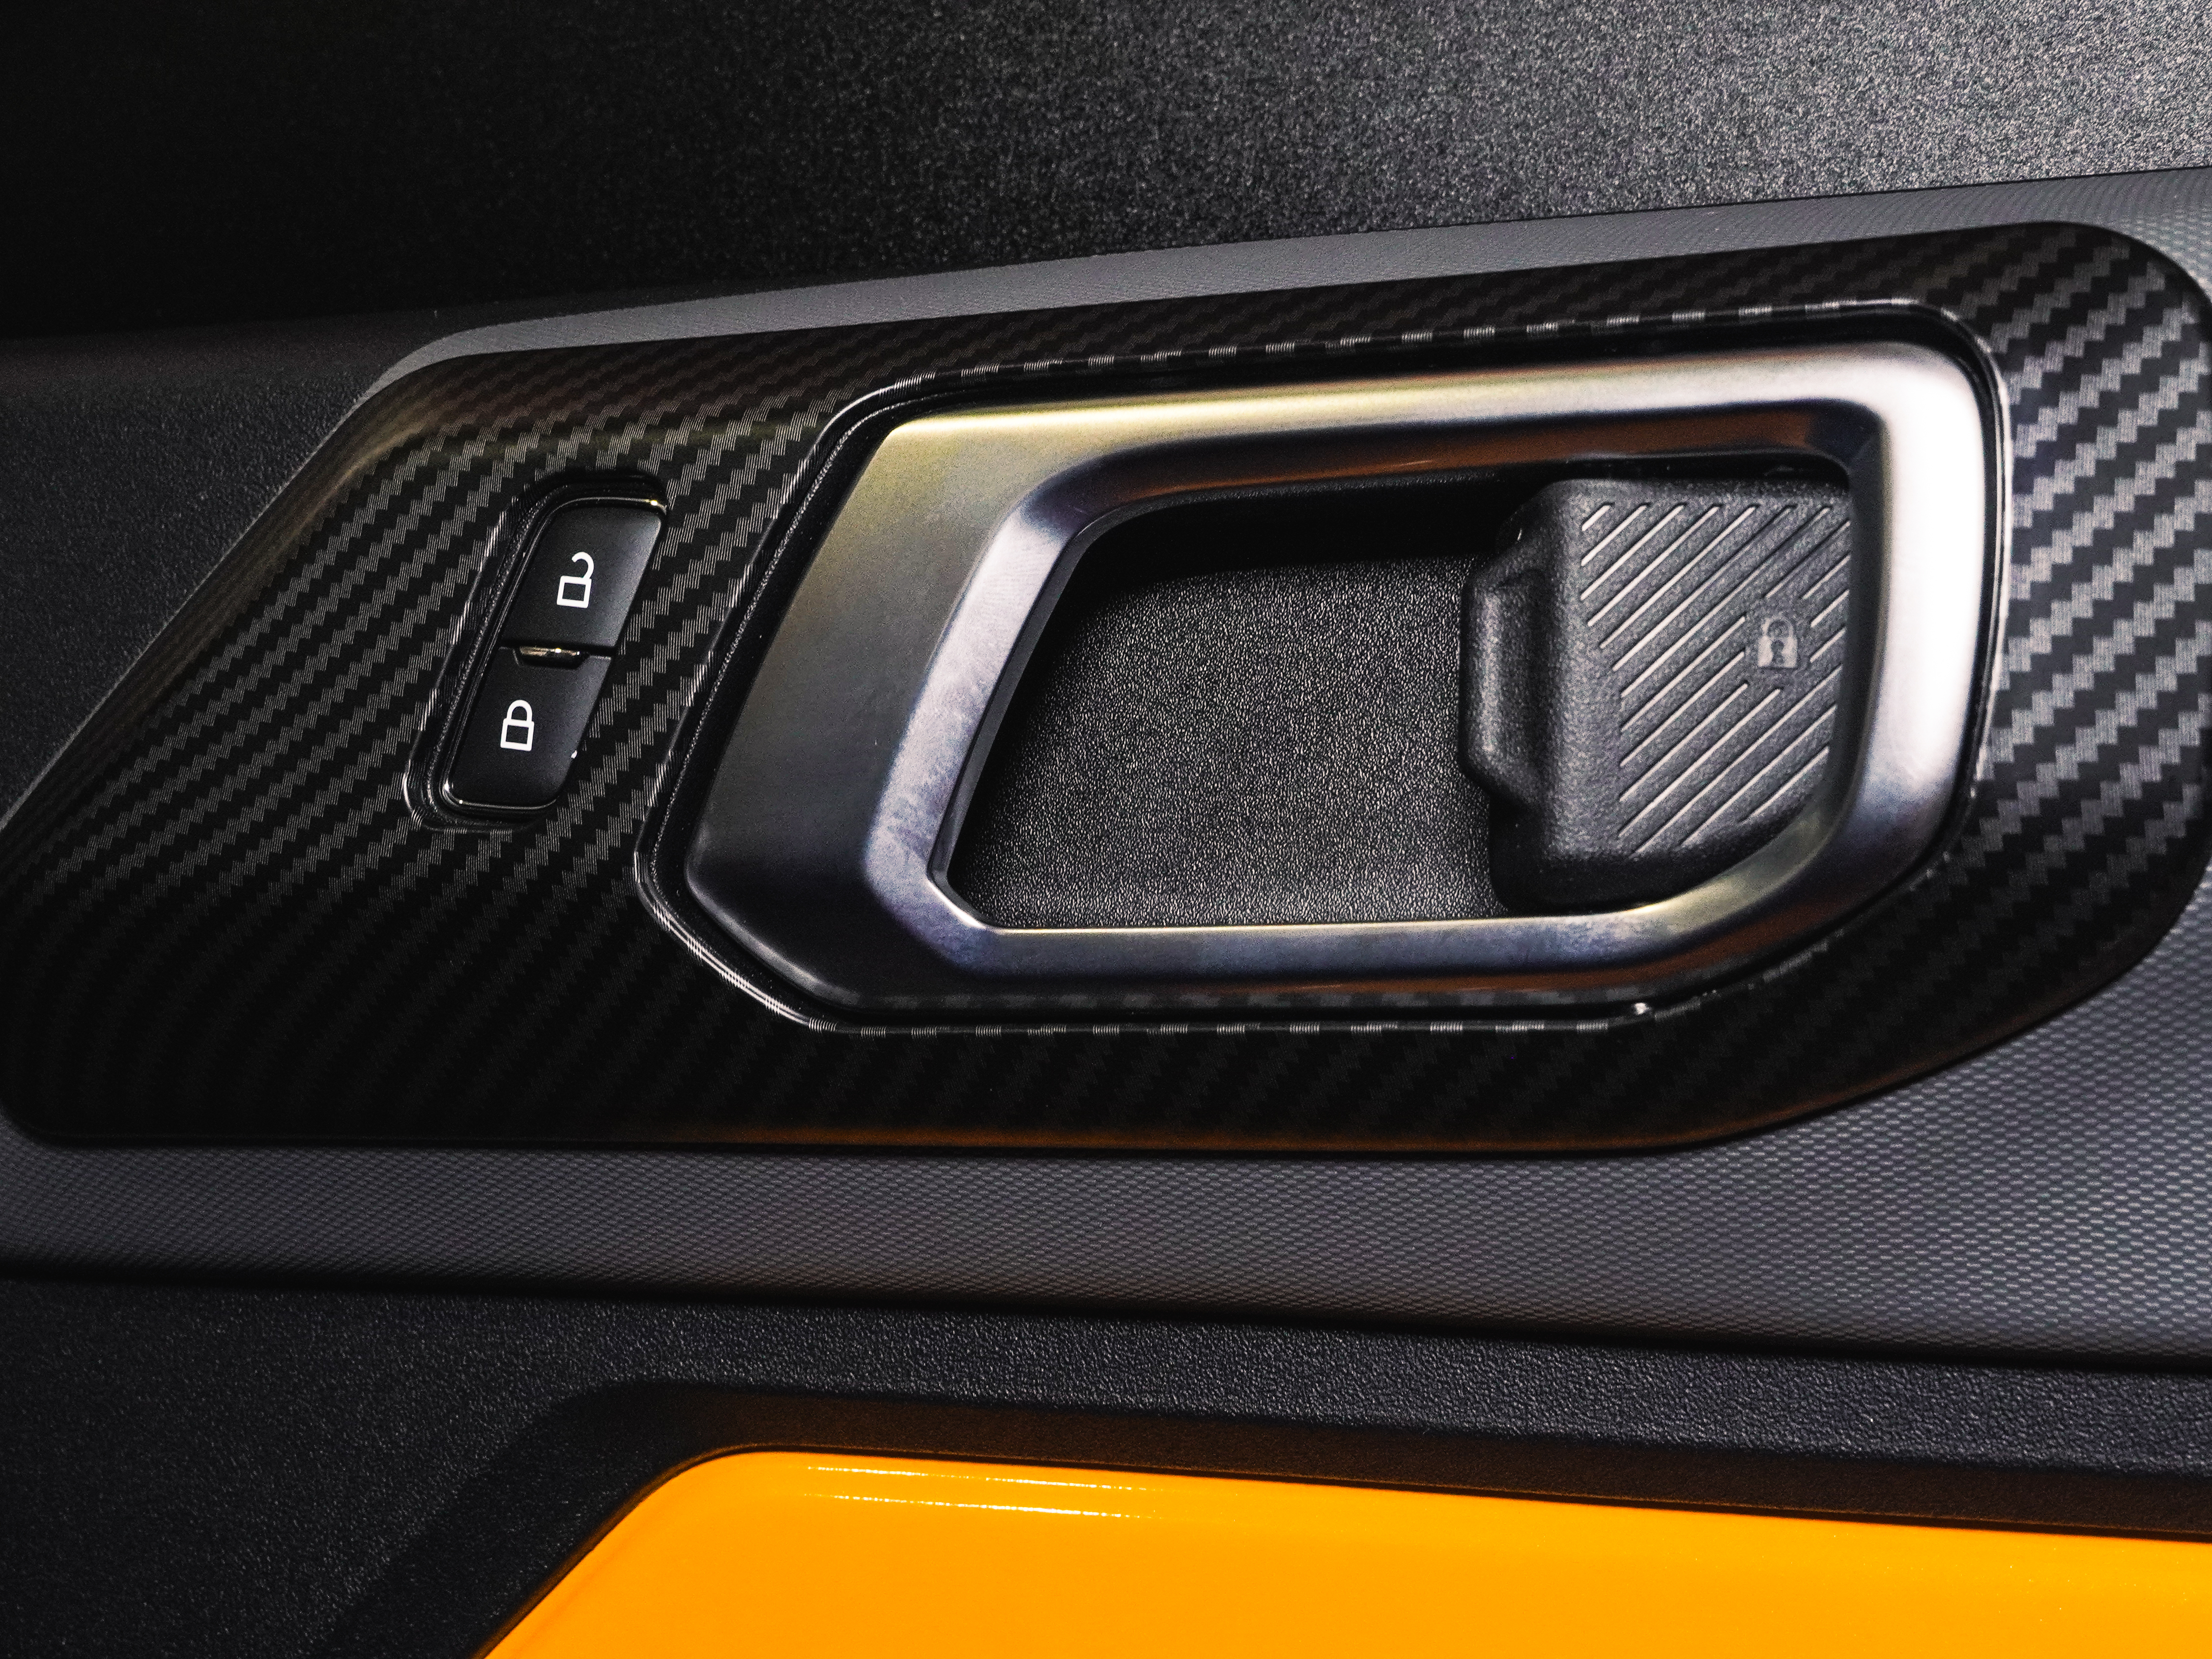 Ford Bronco Interior Door Handle Trim Kit - 4 pc set - Matte Carbon Fiber Finish